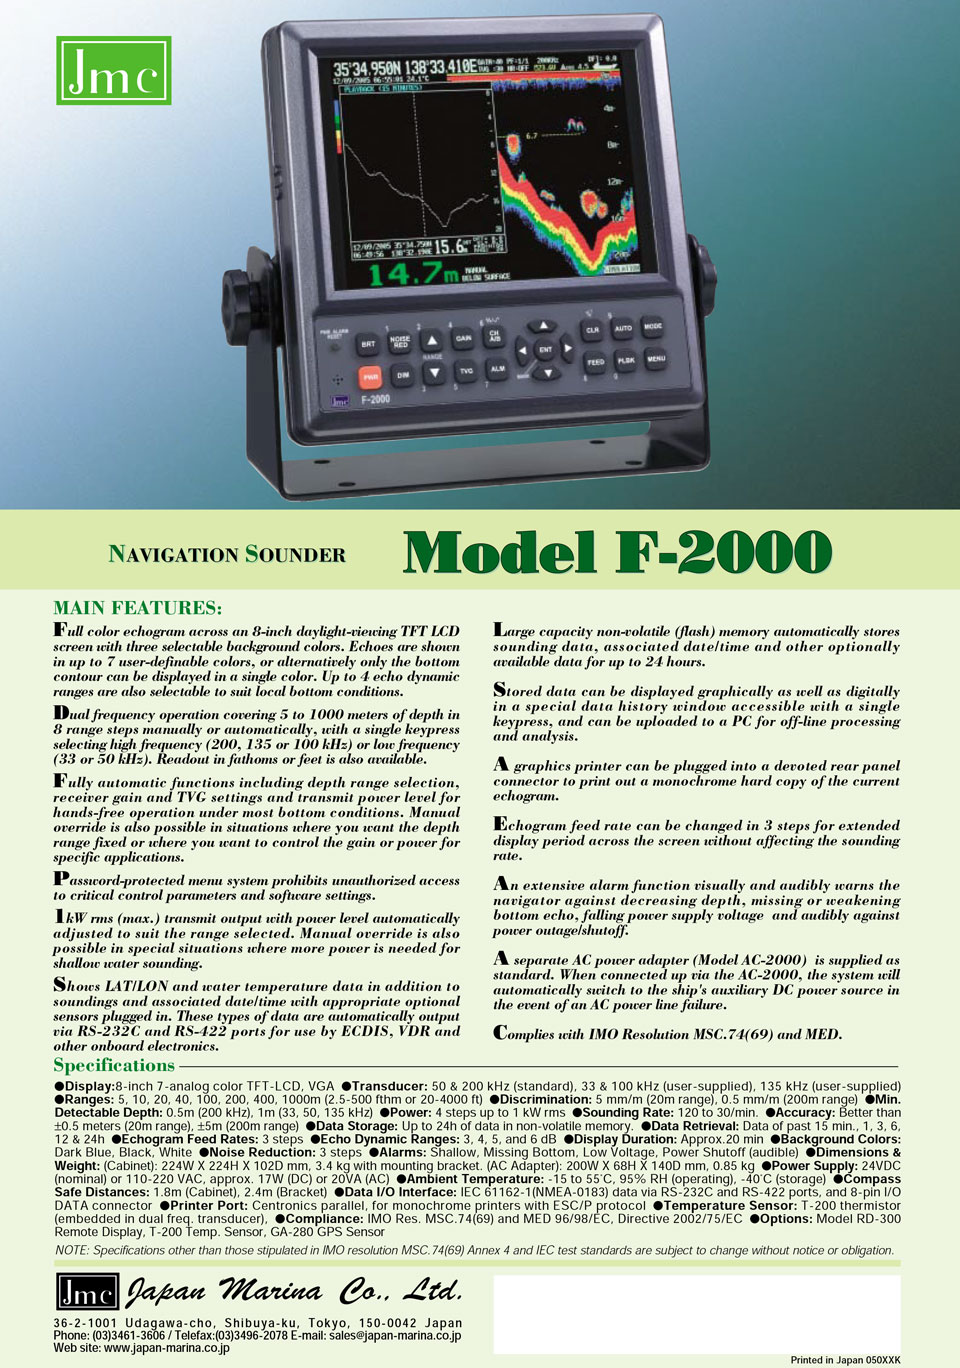 JMC Echo Sounder F-2000